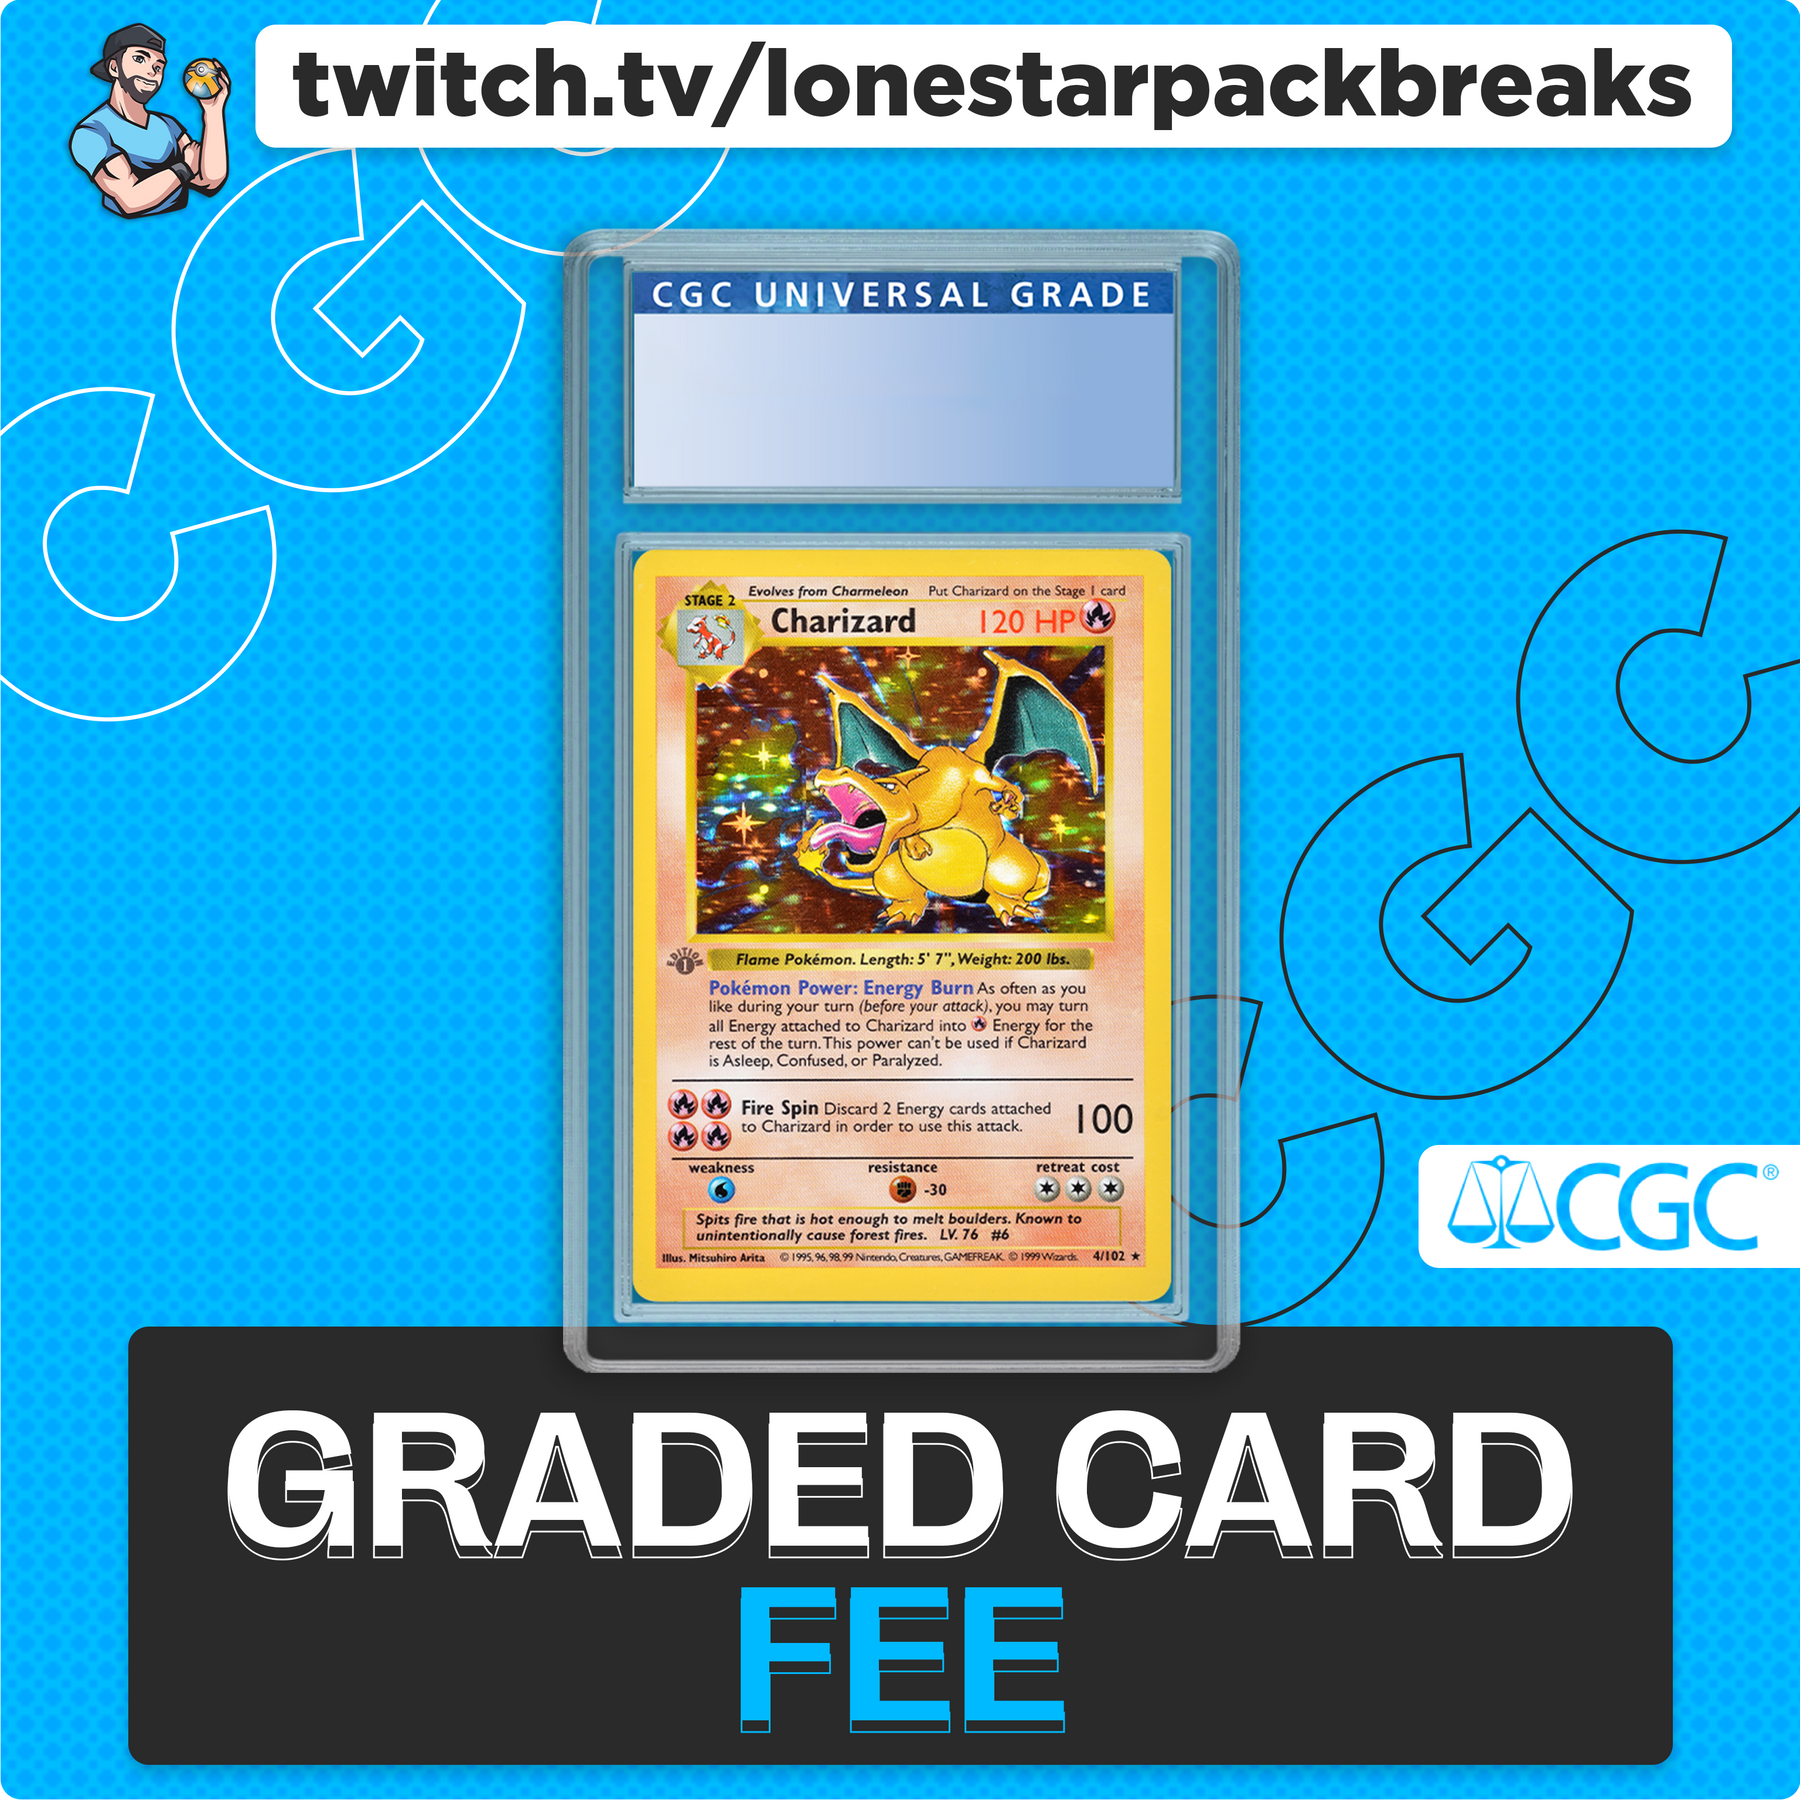 CGC Graded Card Fee